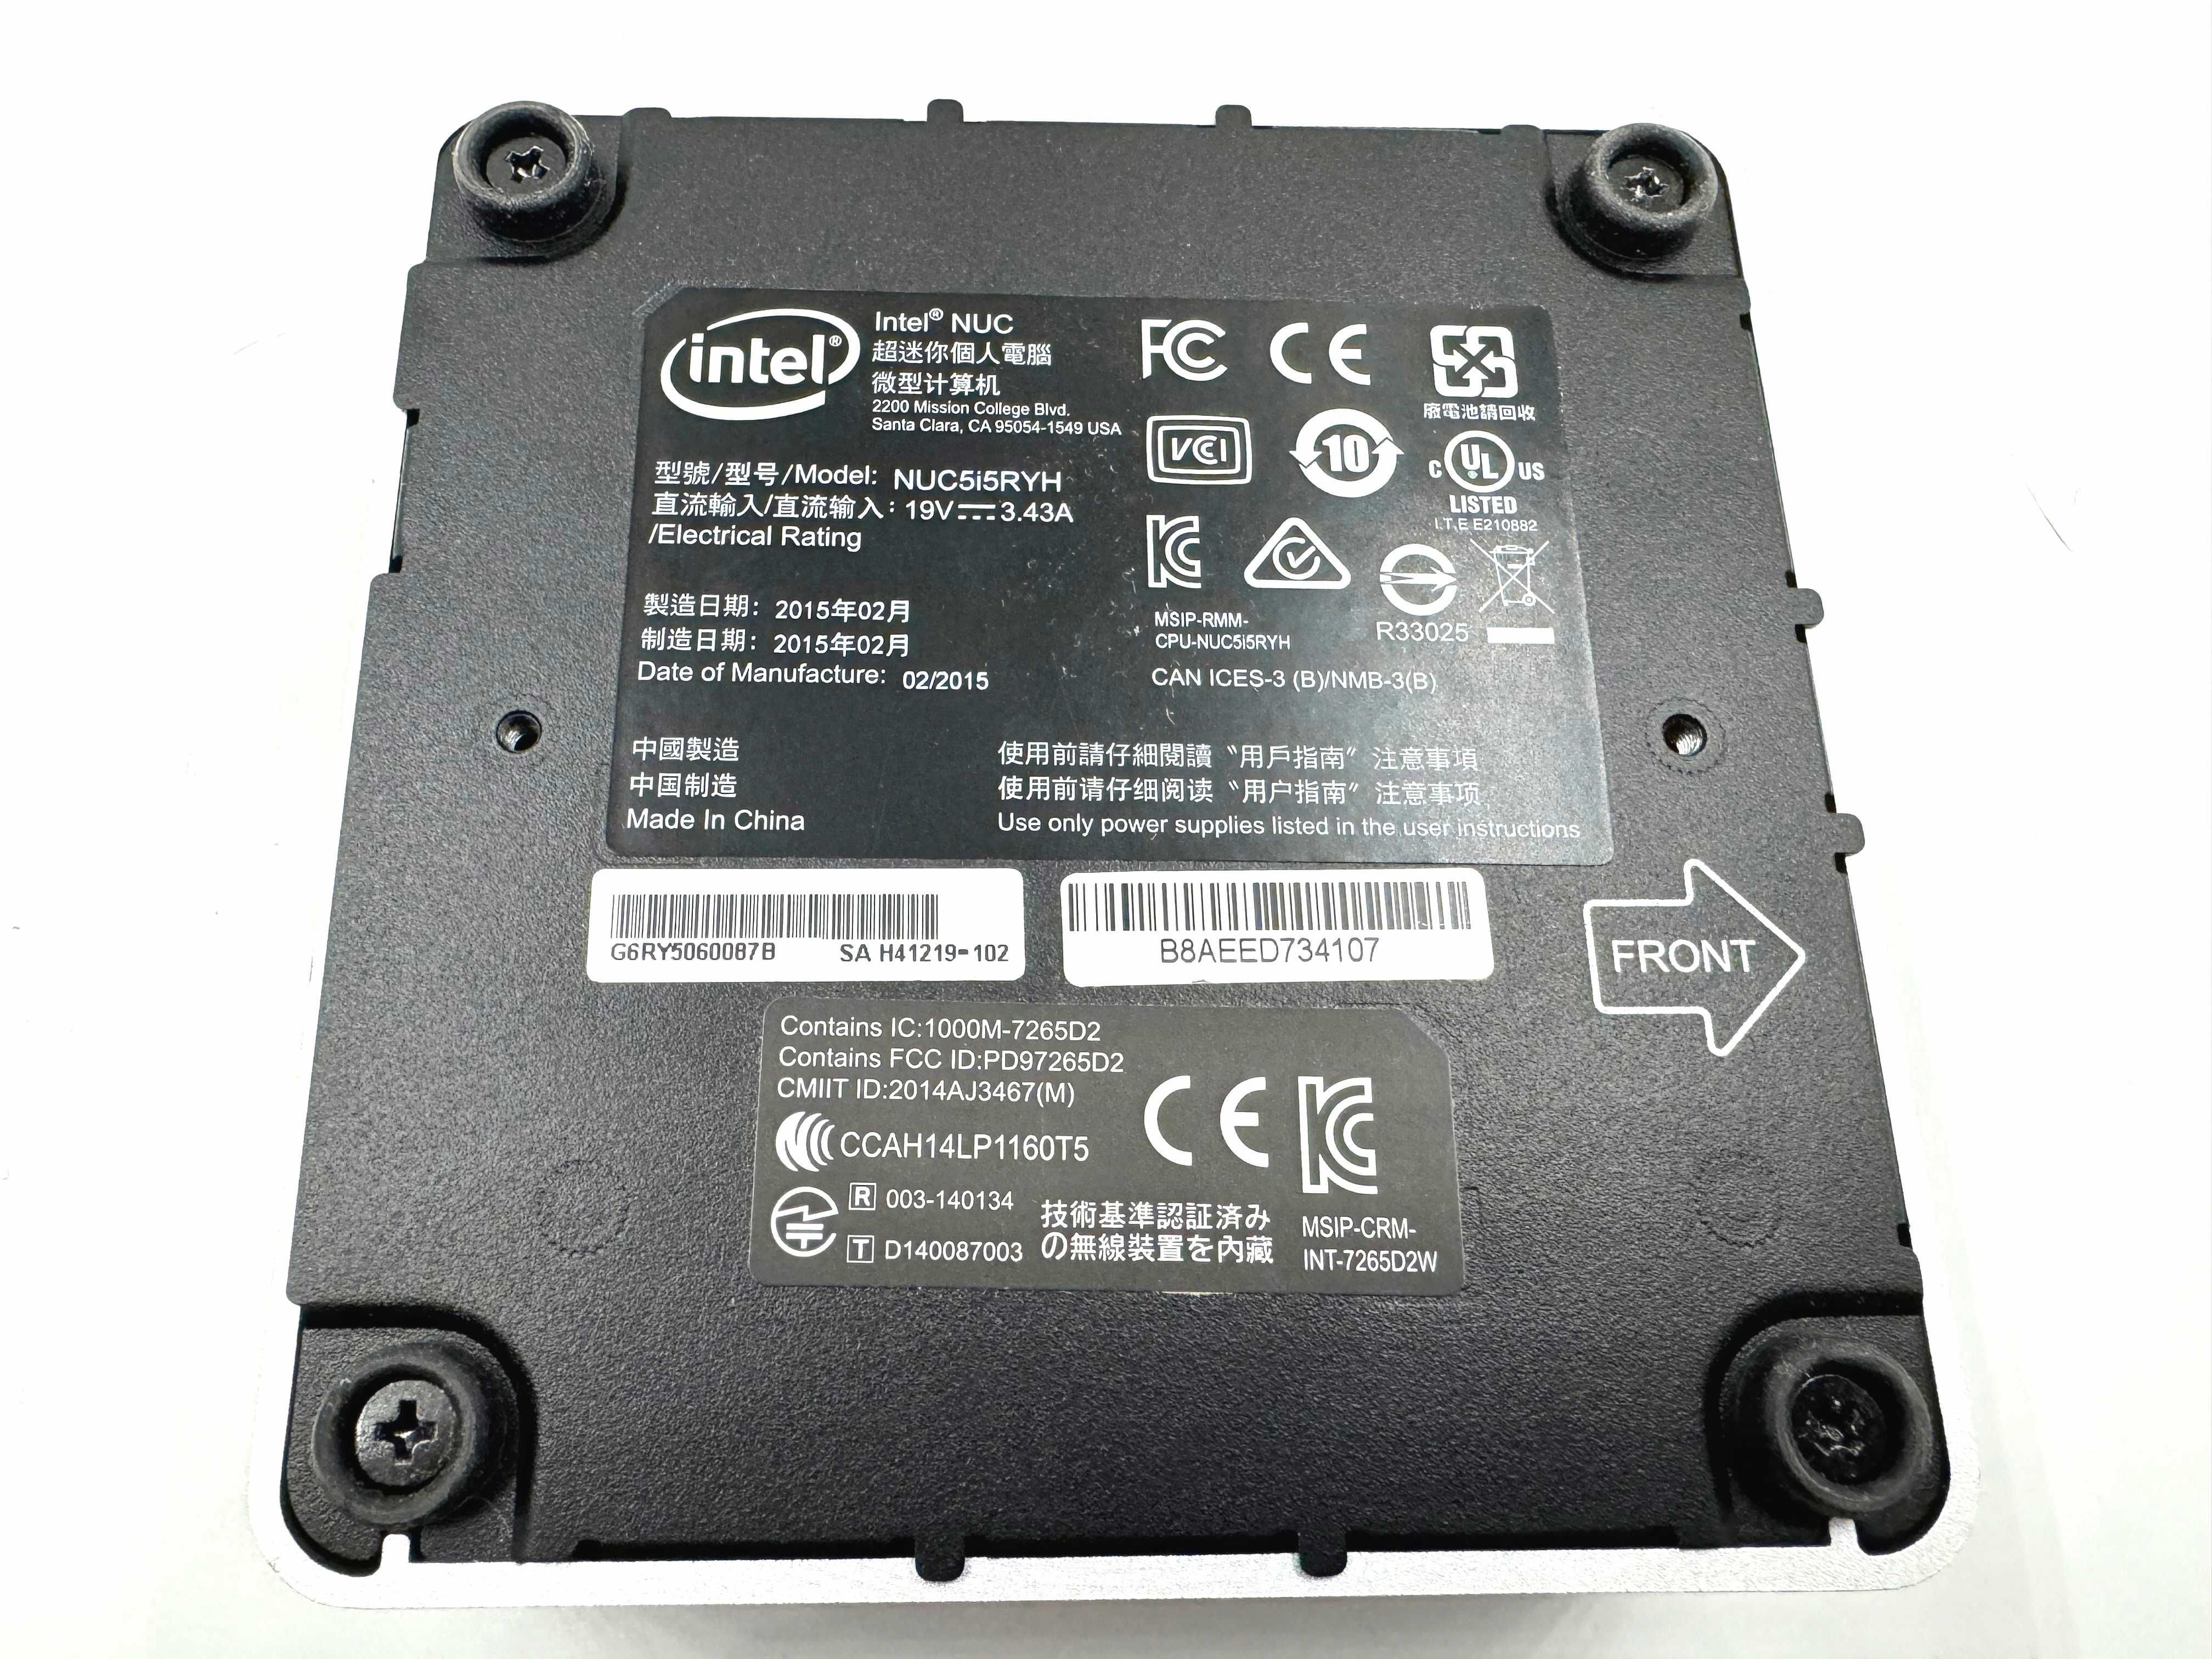 Мини-пк Intel NUC NUC5i5RYH i5-5250u 4gb/128gb; wifi, bt